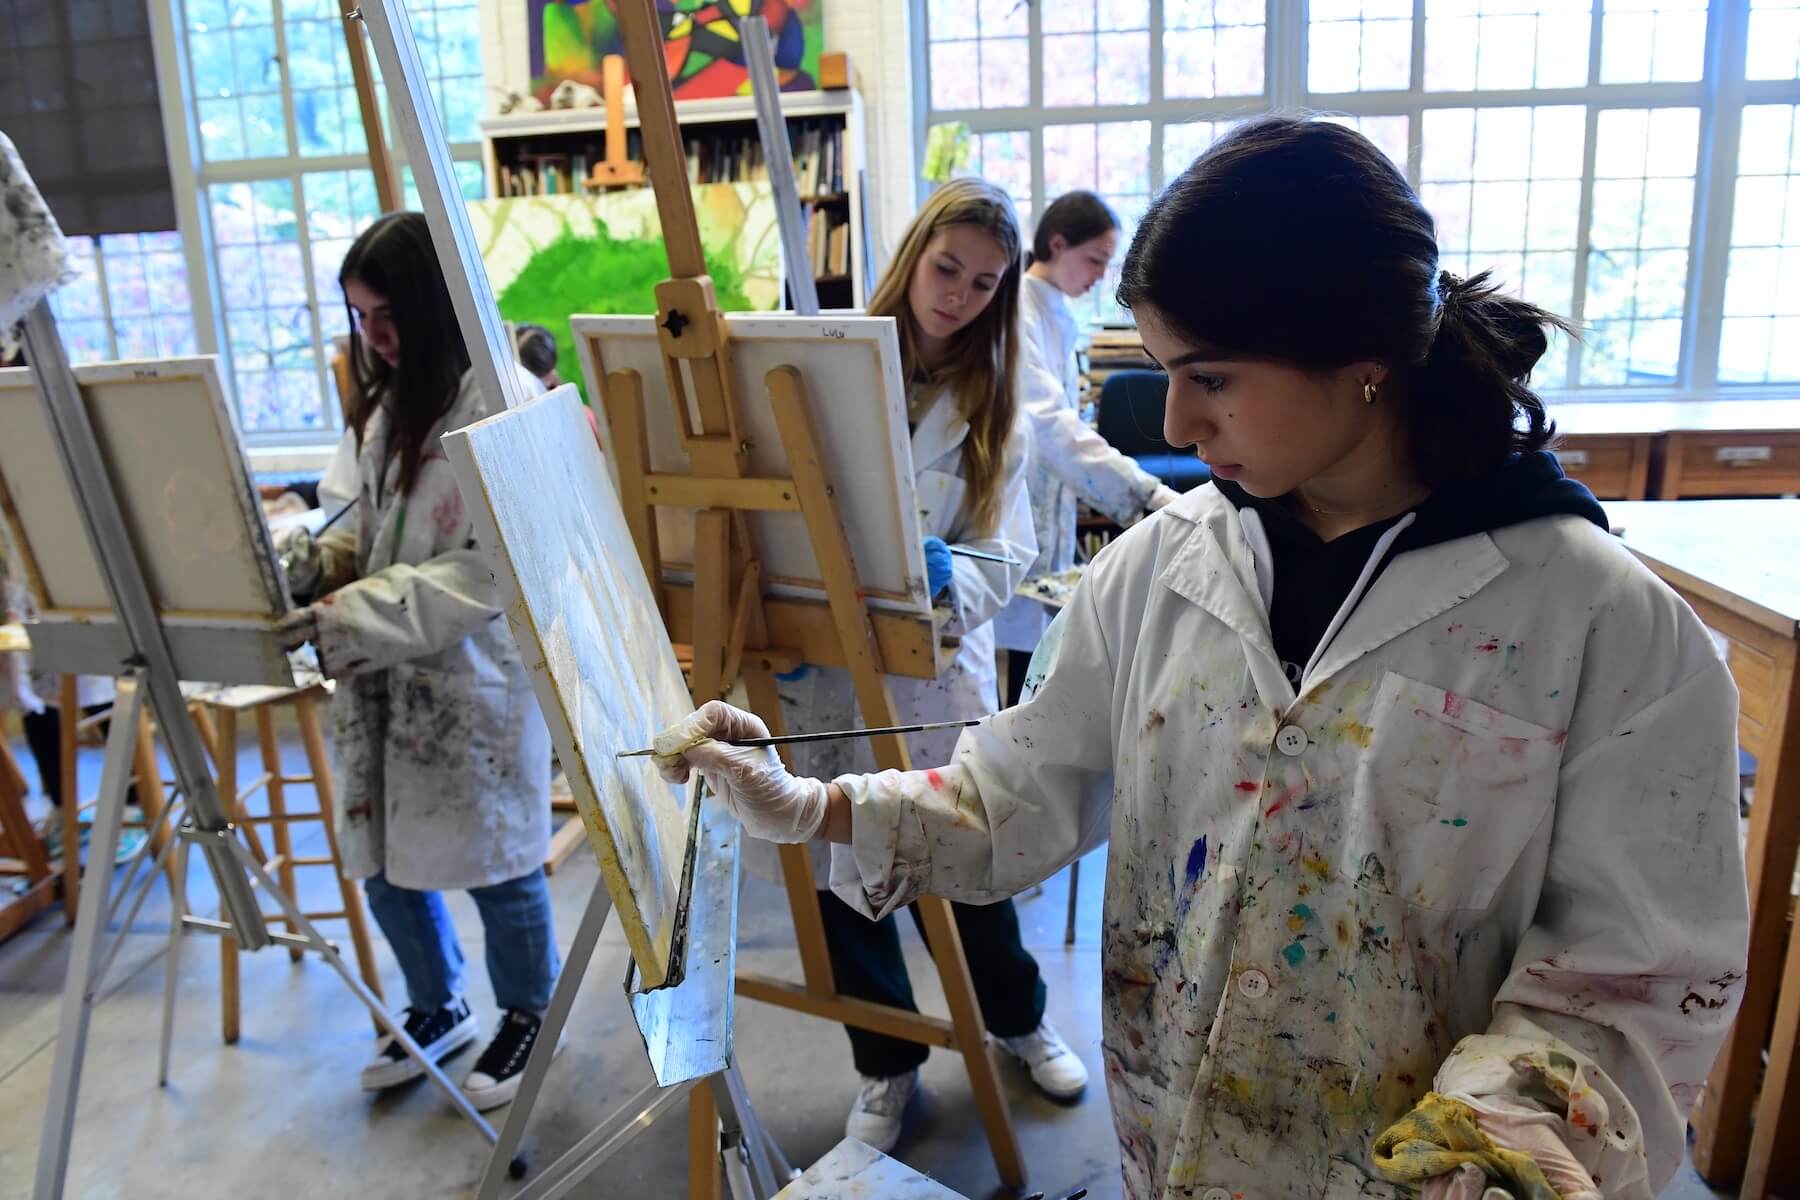 Ethical Culture Fieldston School Fieldston Upper students painting on easels in art class